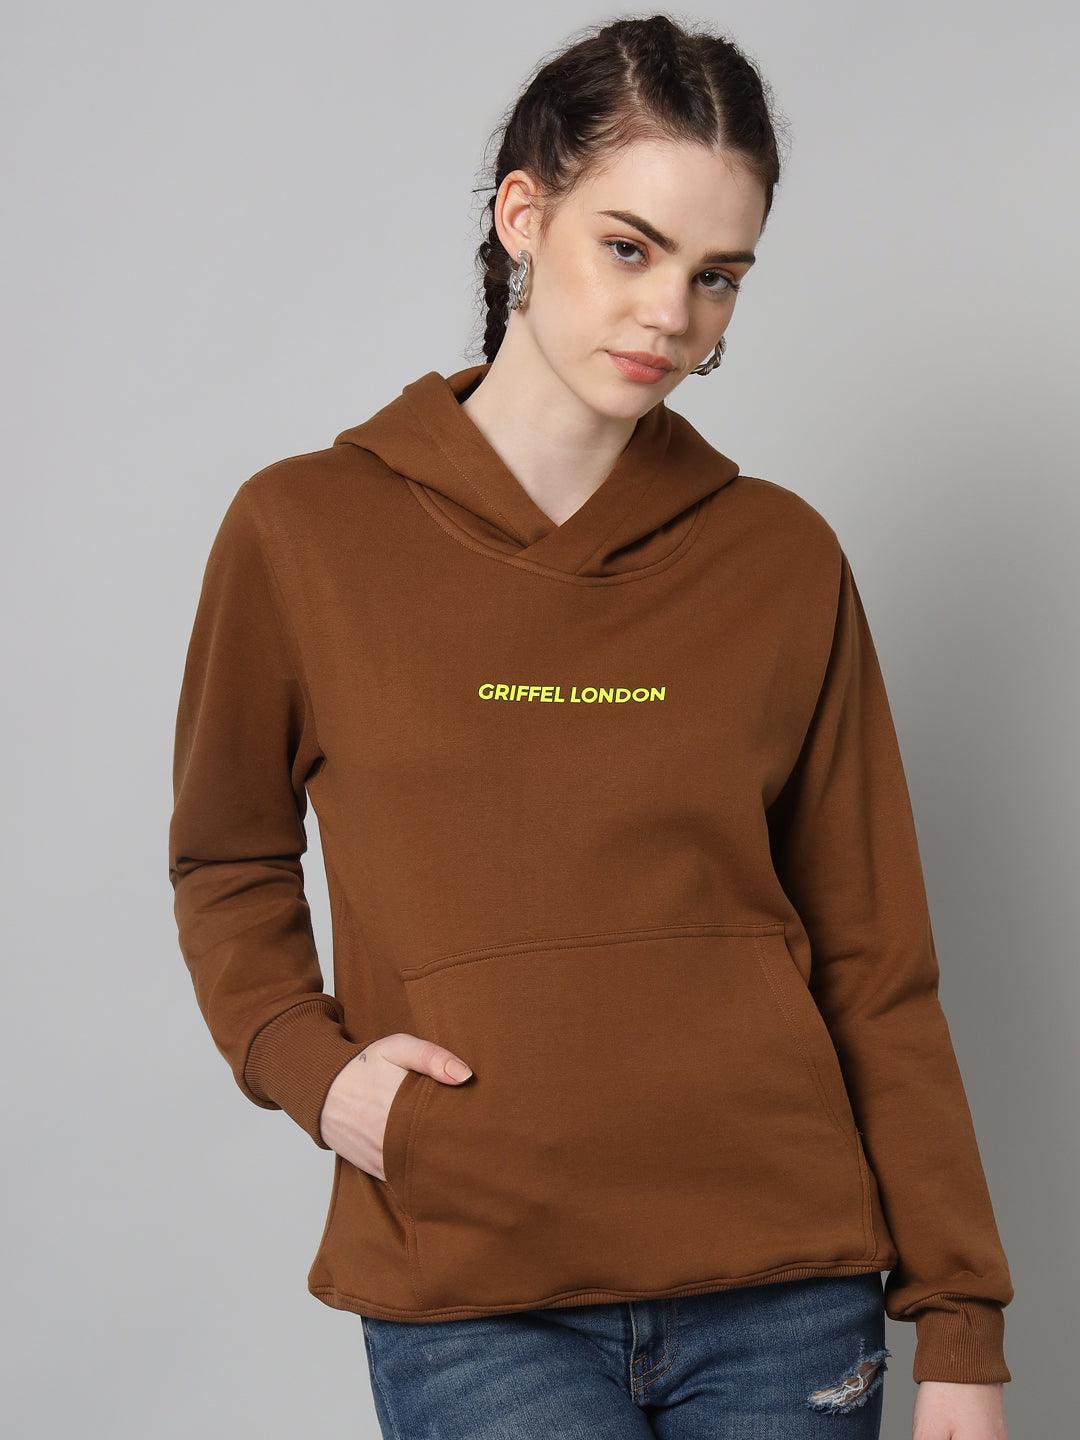 Griffel Women’s Cotton Fleece Full Sleeve Coffee Hoodie Sweatshirt - griffel